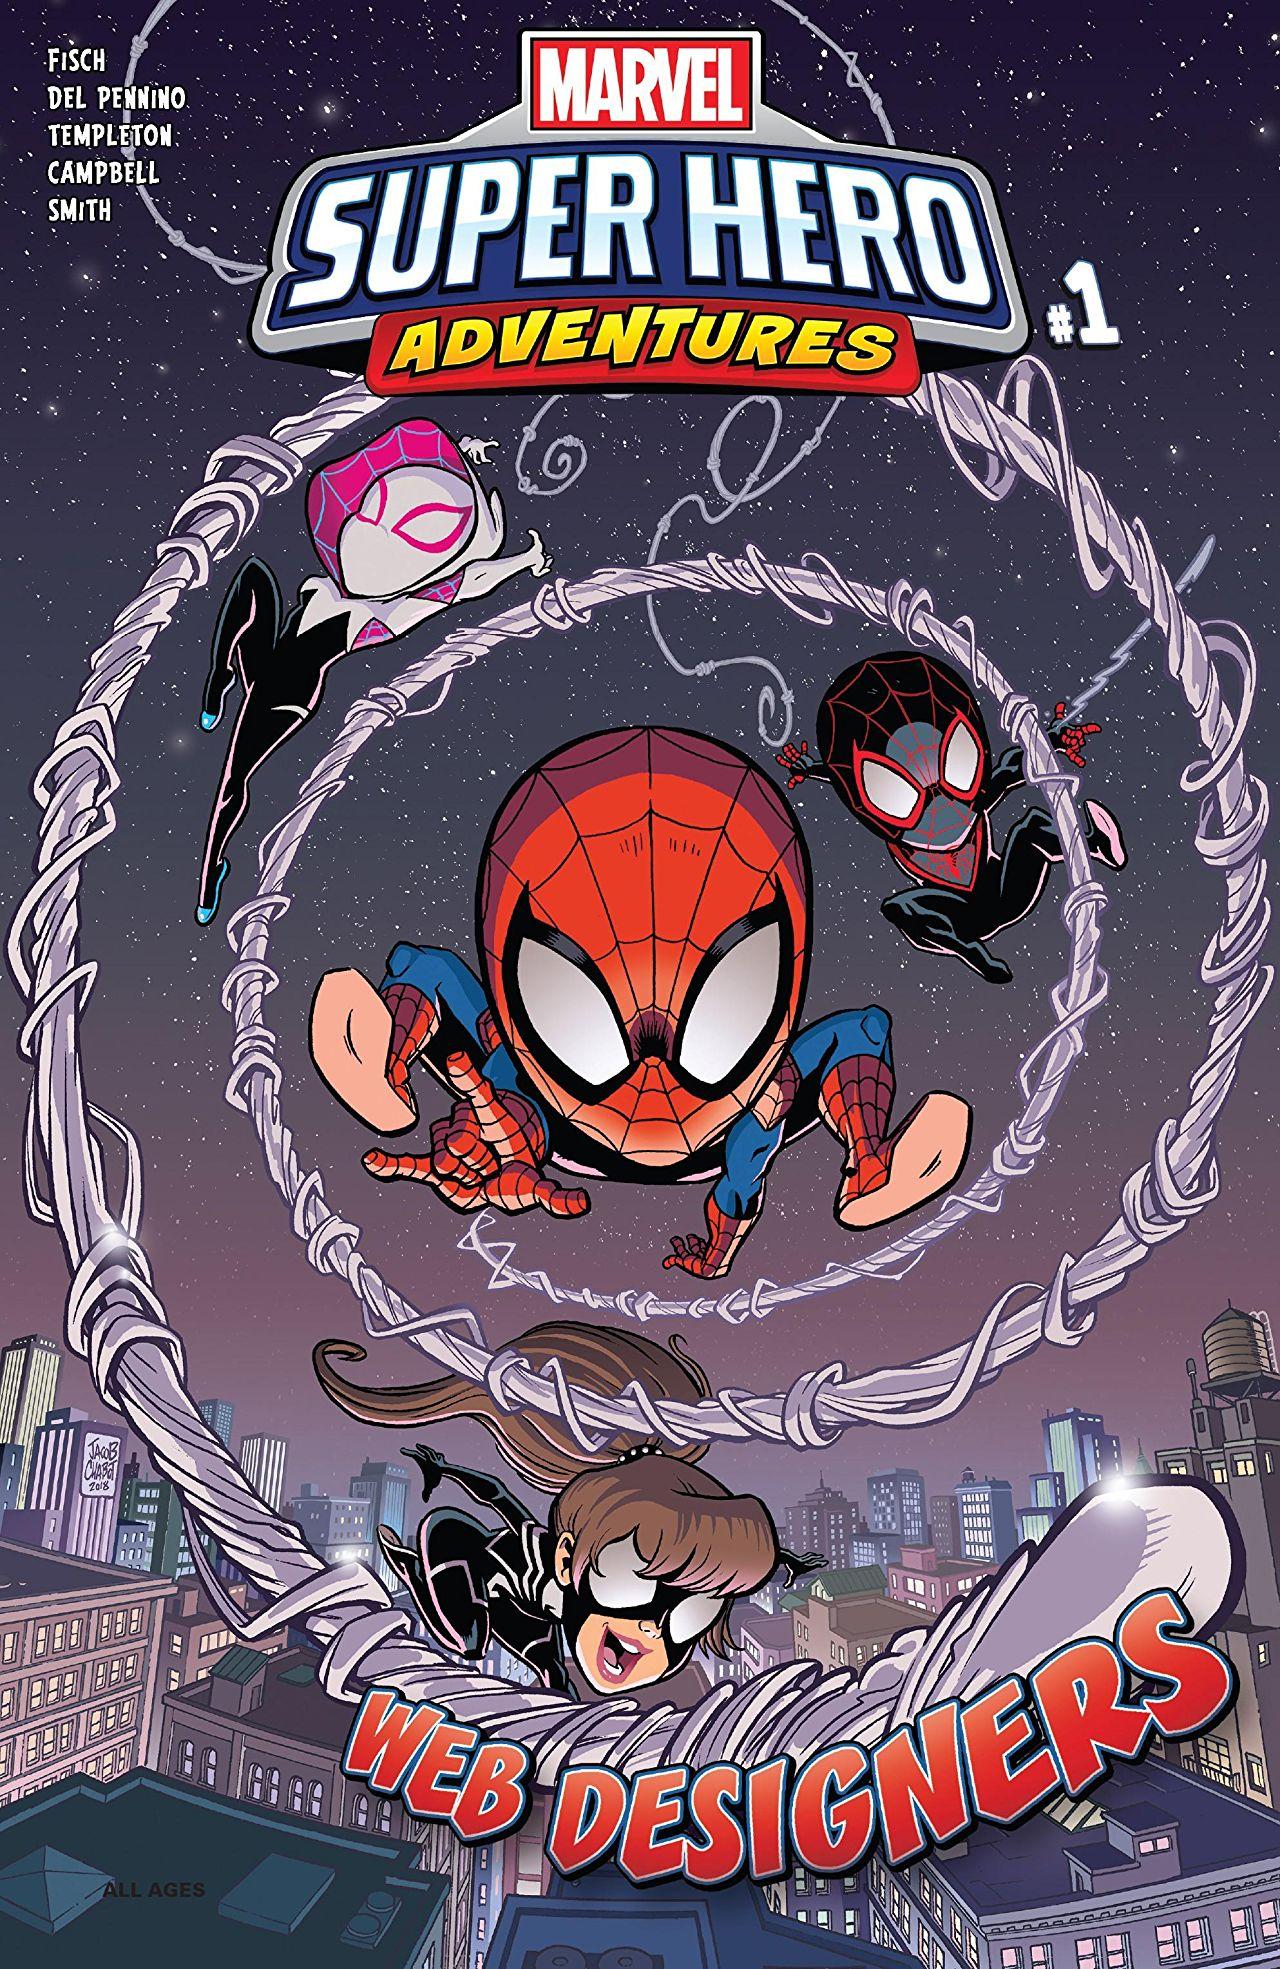 Marvel Super Hero Adventures: Spider-Man - Web Designers Vol. 1 #1